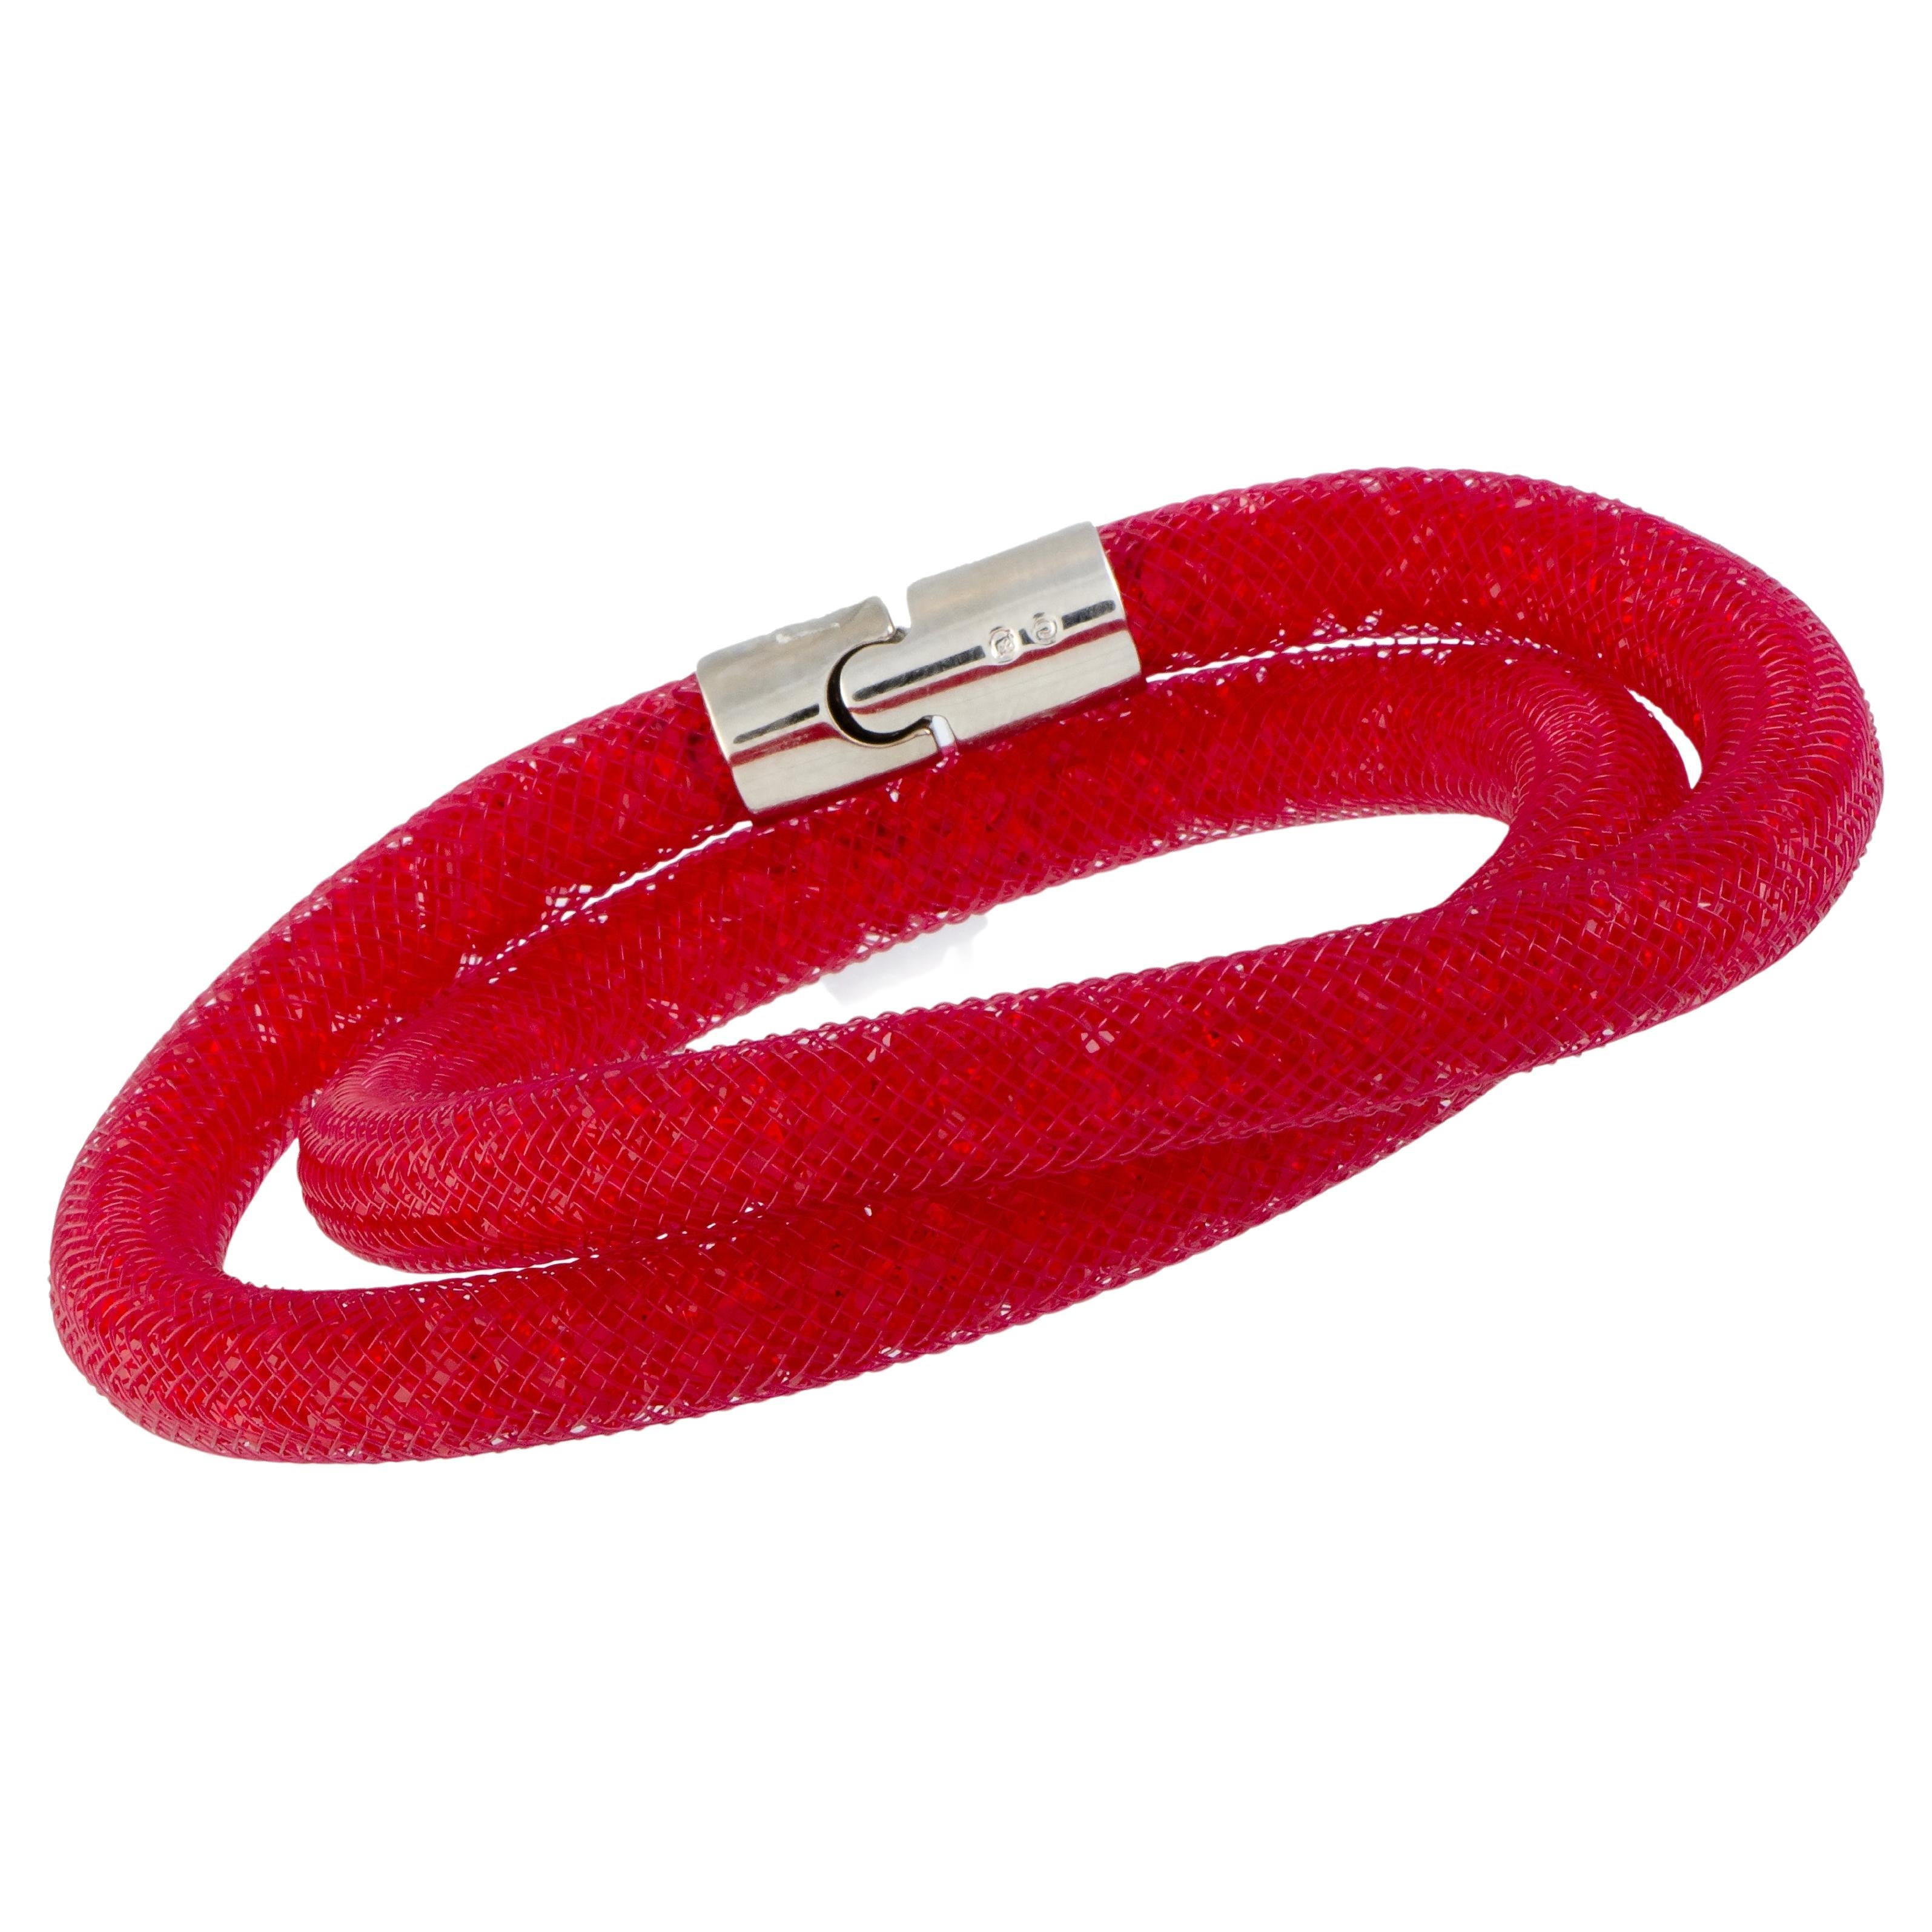 Swarovski Stardust Red Crystals Bracelet 5184845-m-medium For Sale